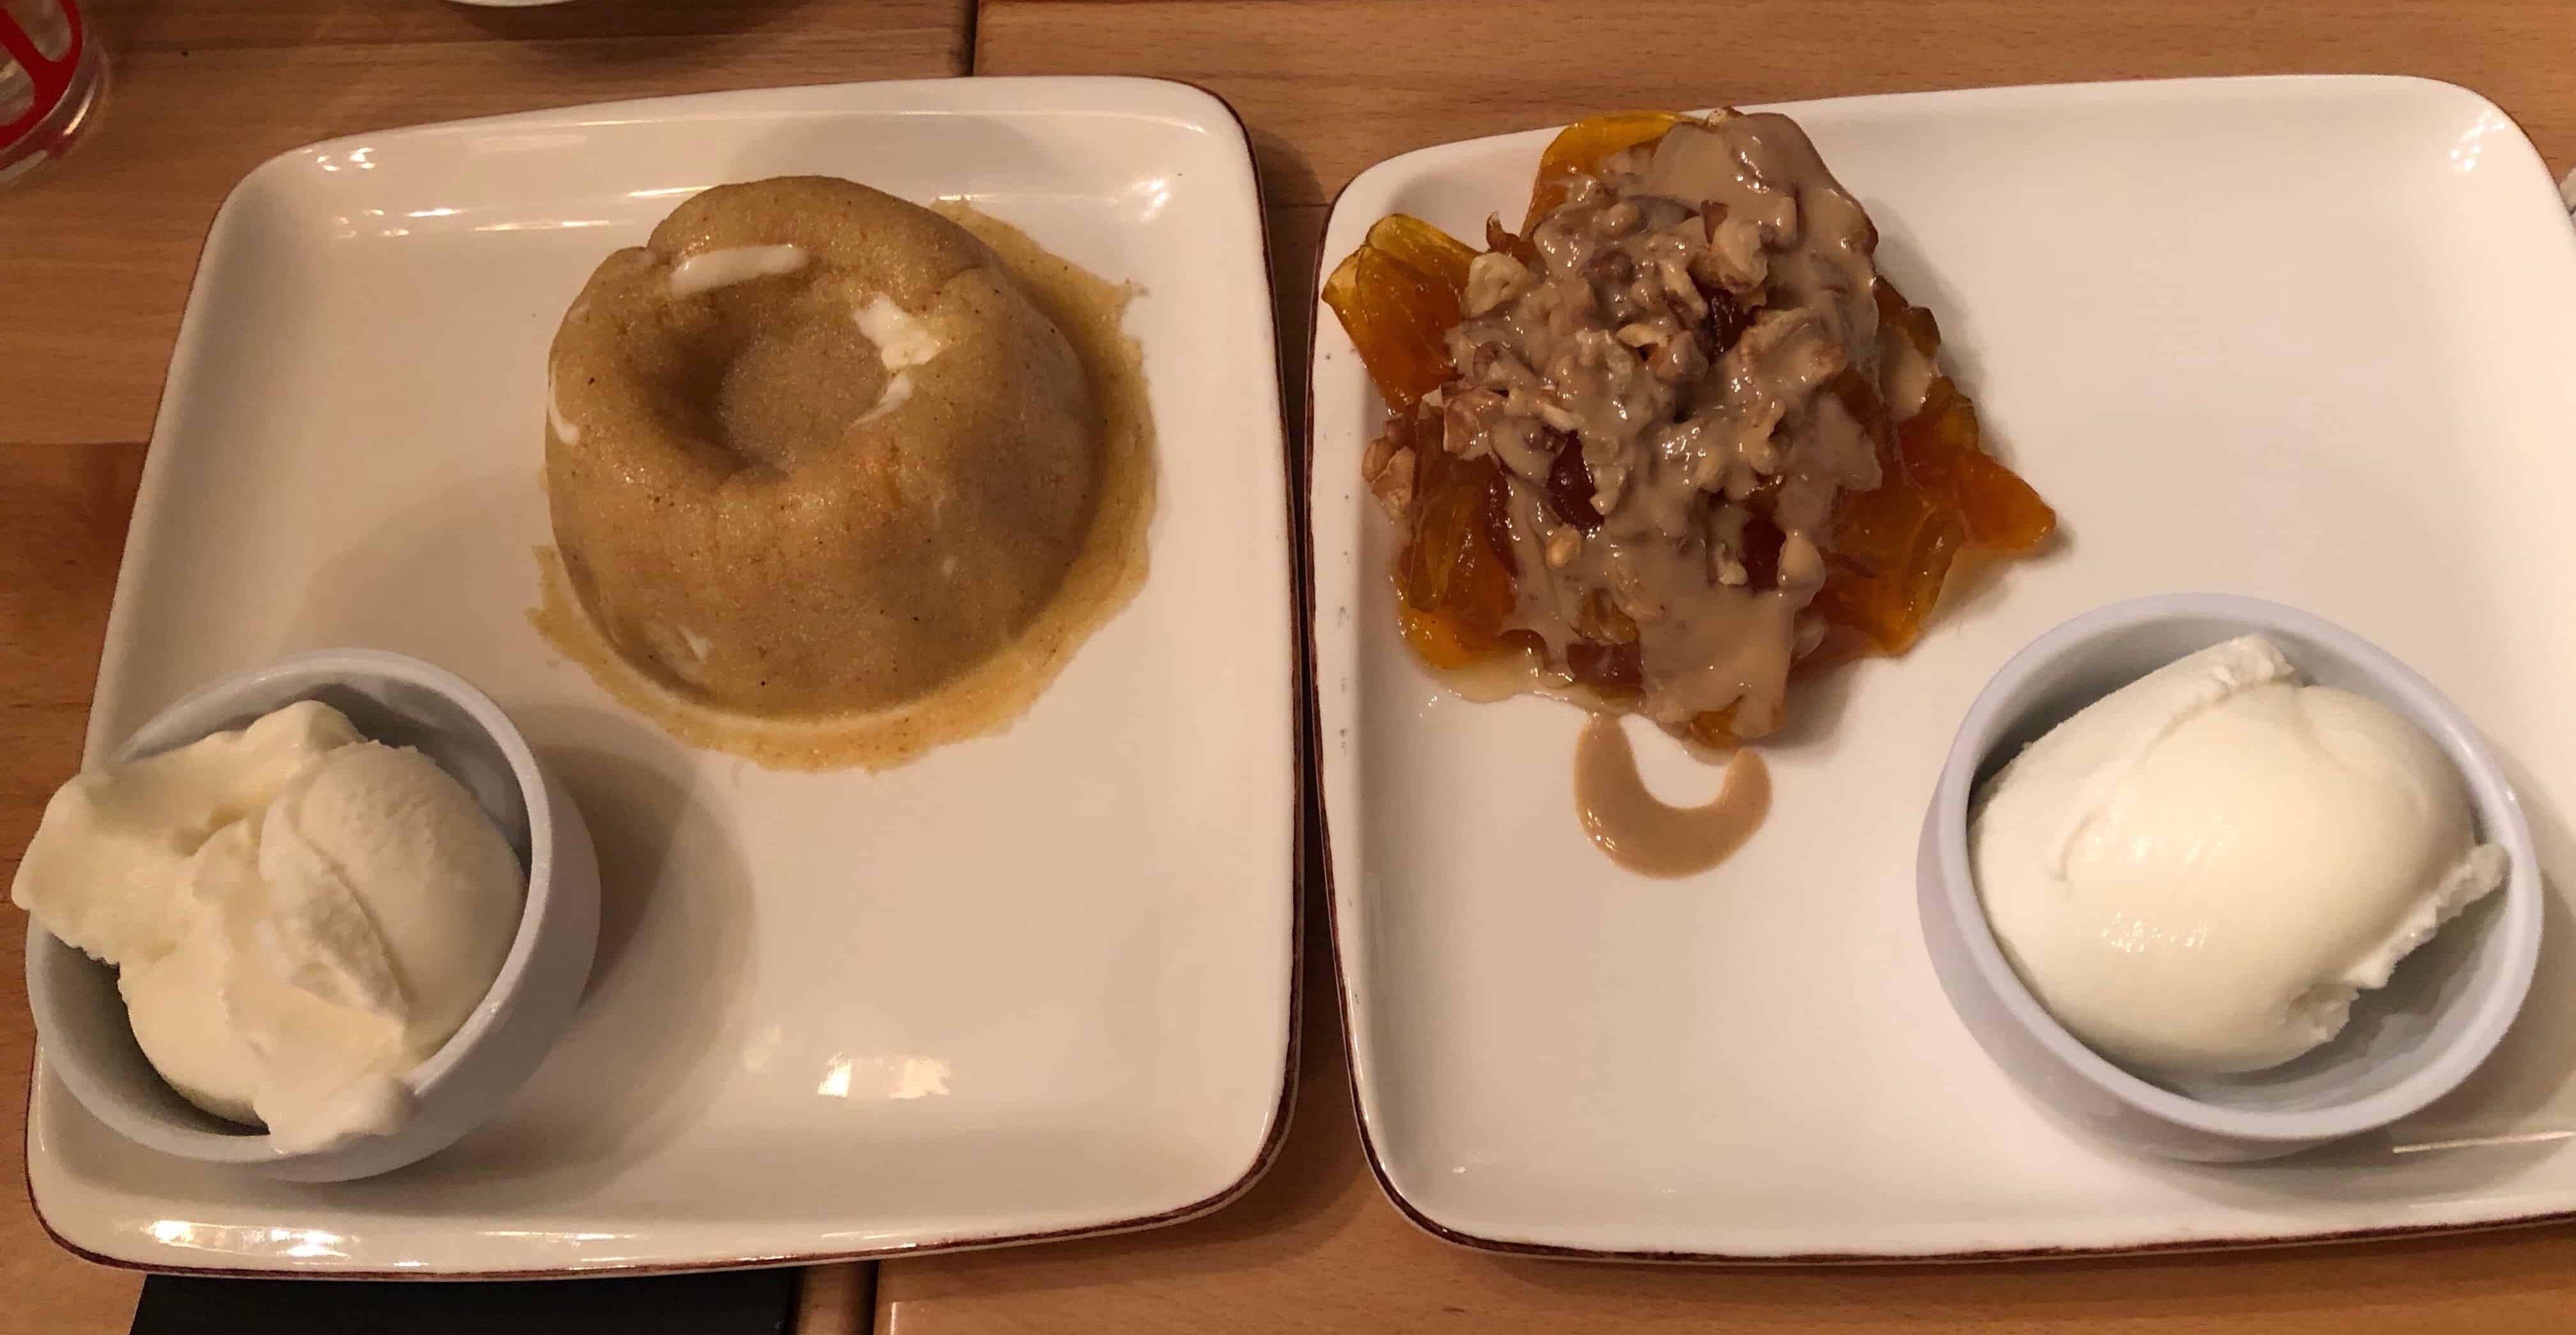 Semolina dessert (left) and pumpkin dessert (right)